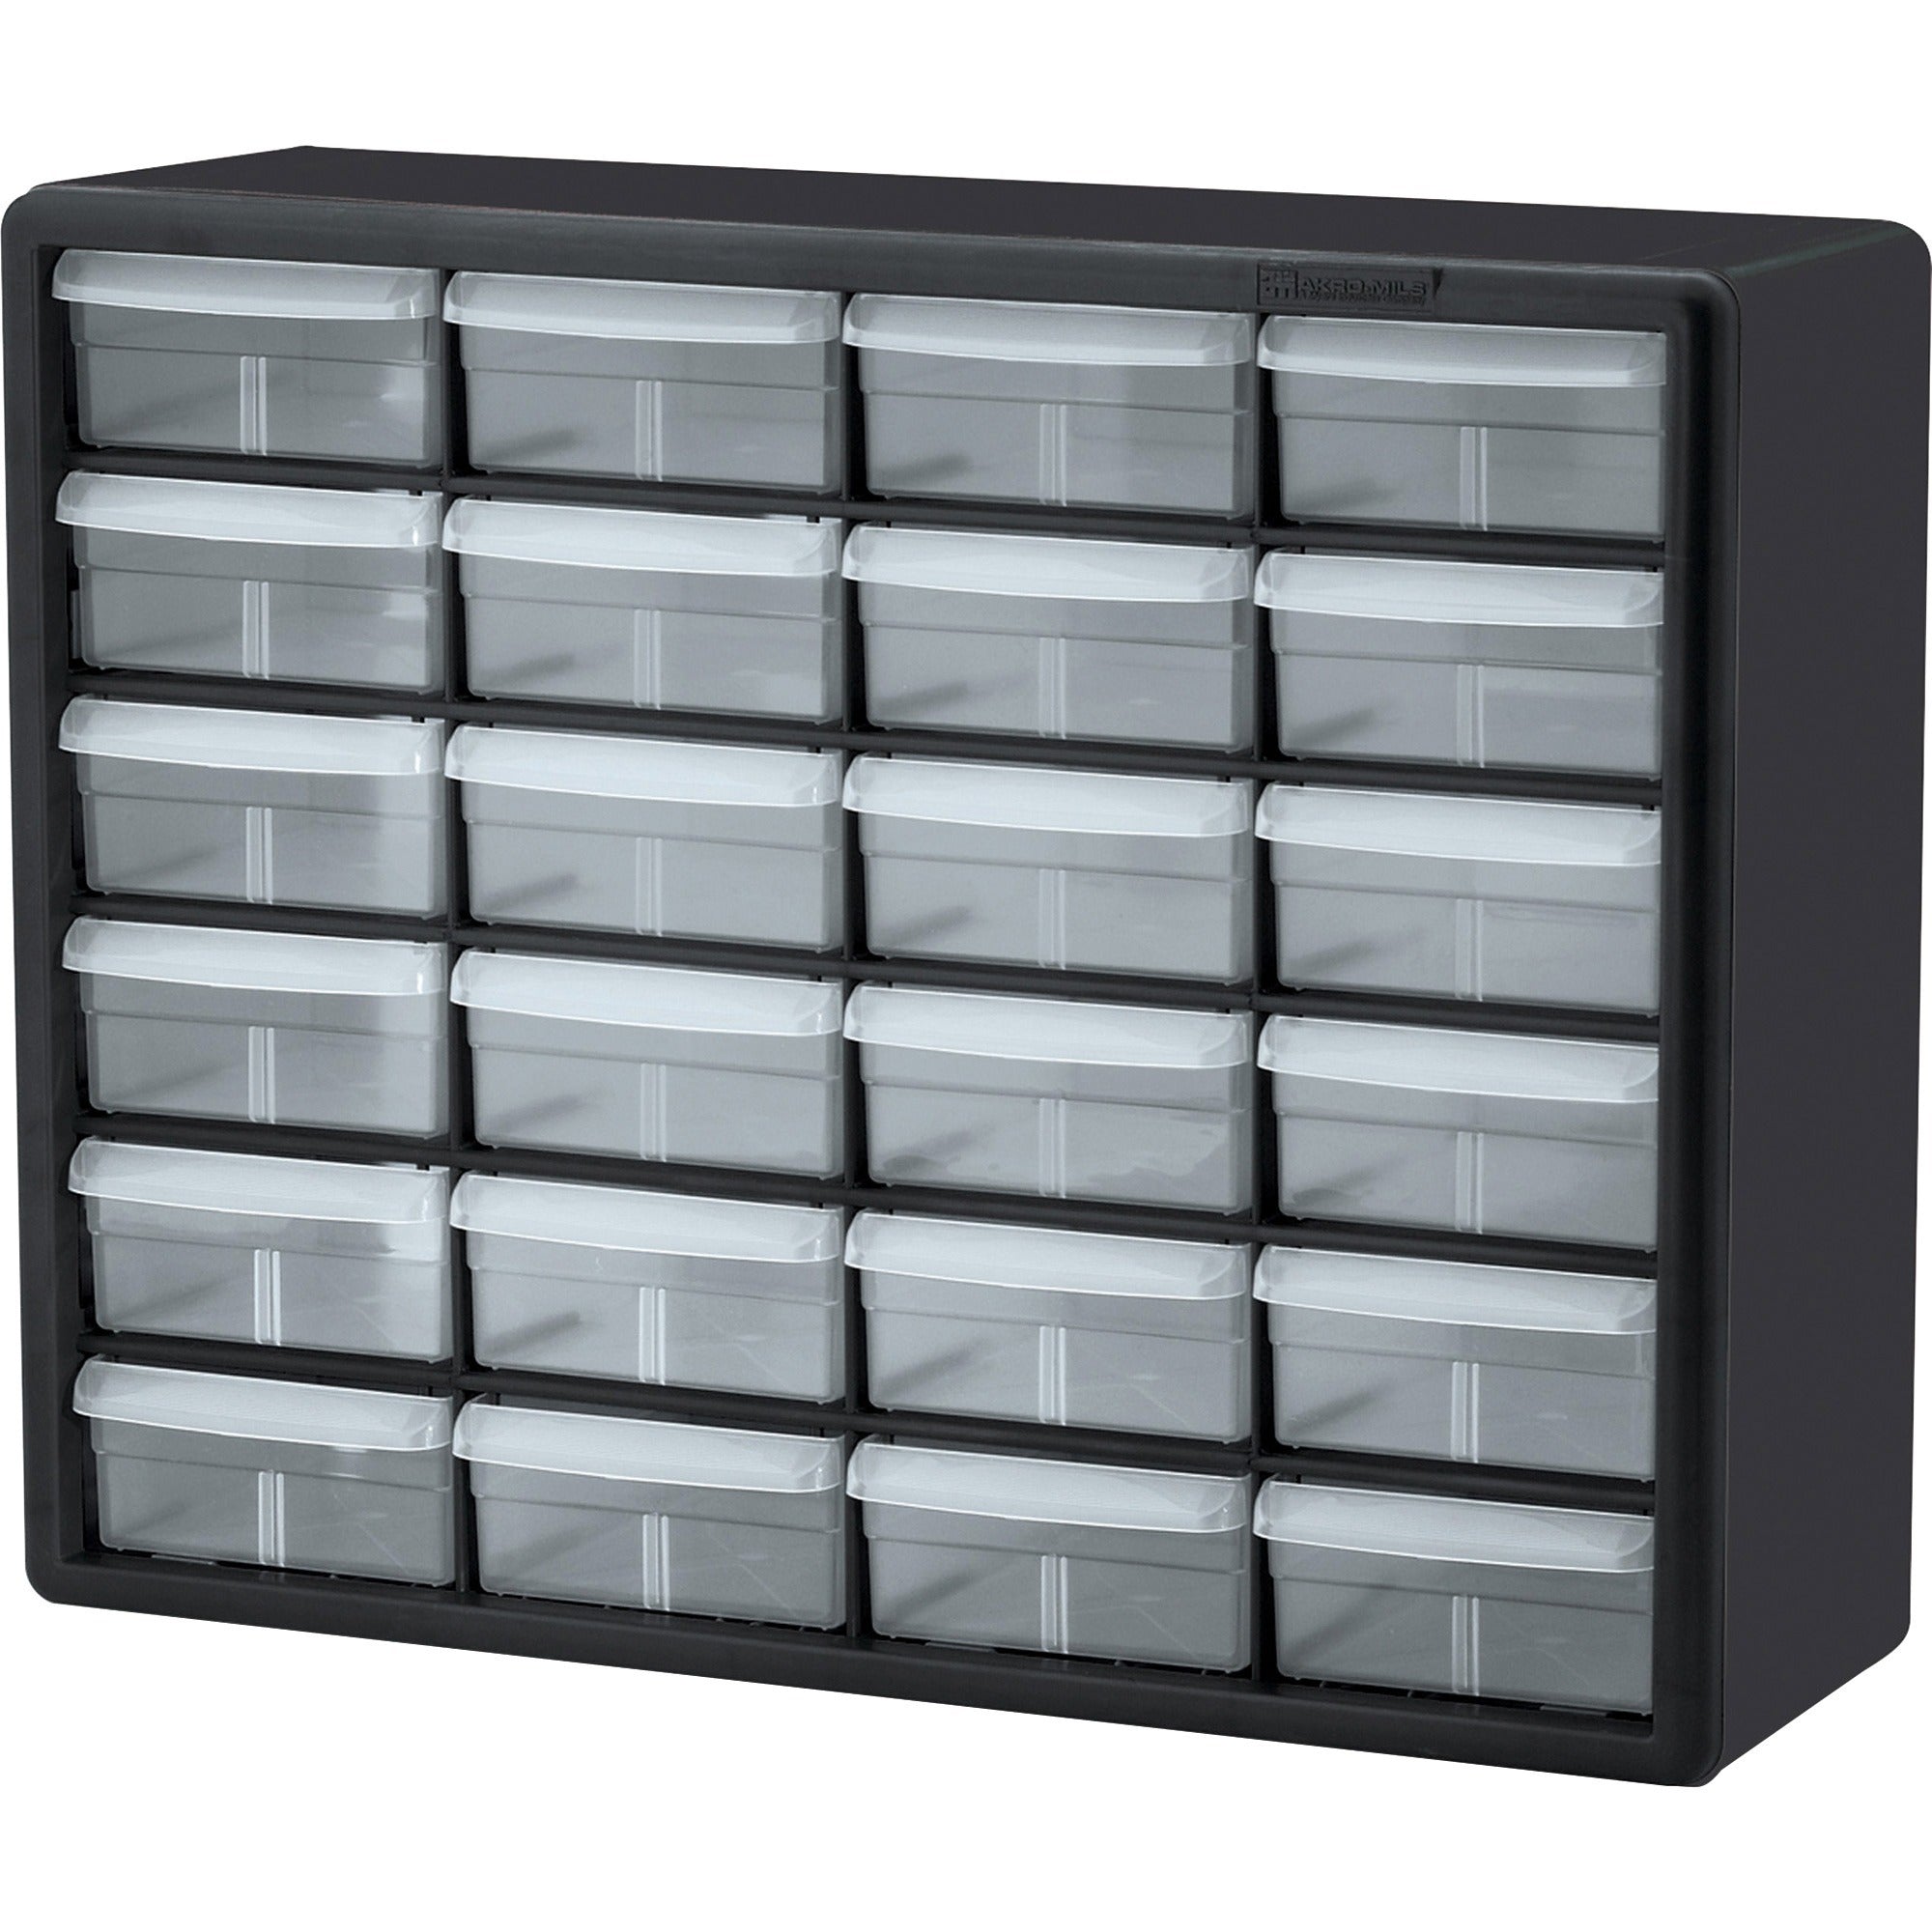 Akro-Mils 24-Drawer Plastic Storage Cabinet - 24 Drawer(s) - 15.8" Height6.4" Depth x 20" Length%Floor - Stackable, Finger Grip, Unbreakable - Black - Plastic, Polymer - 1 Each - 